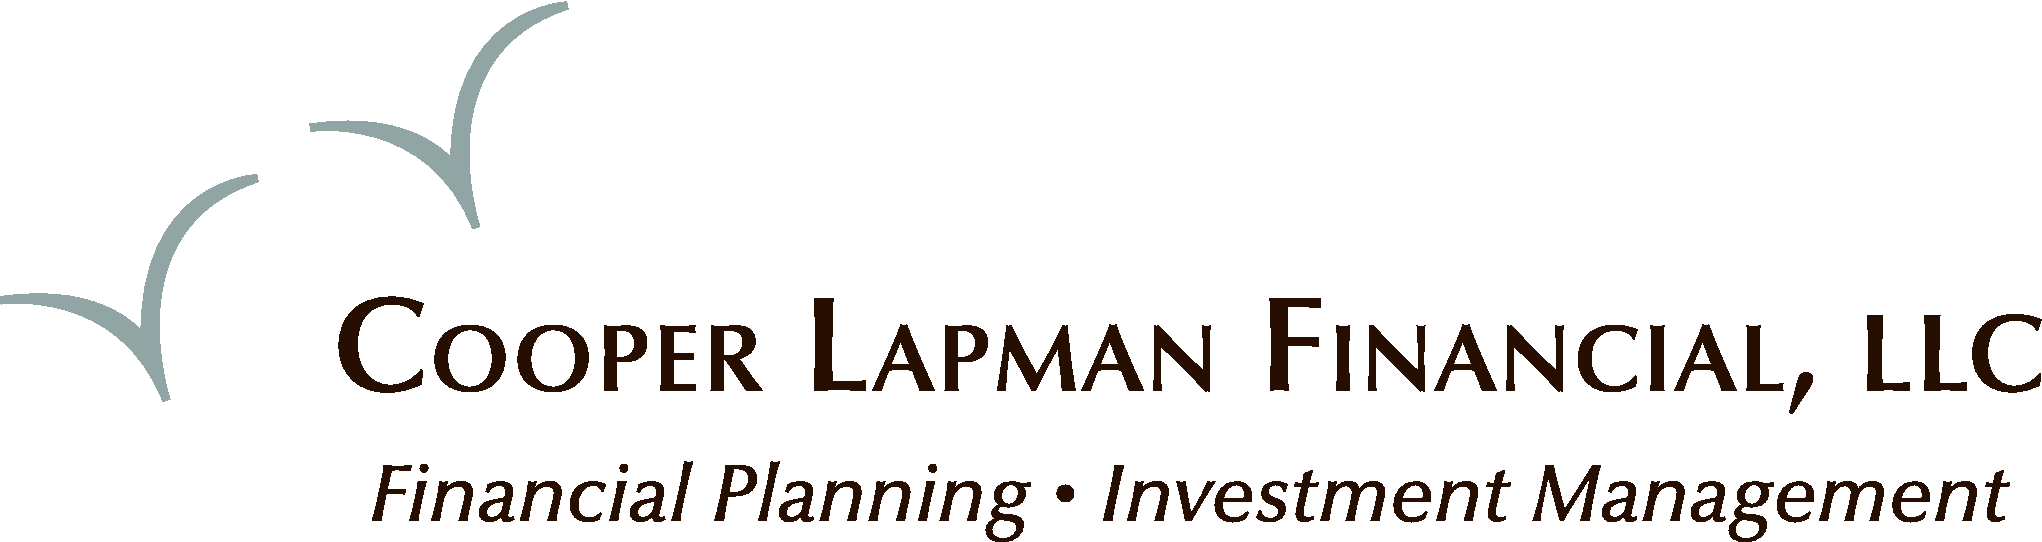 Cooper Lapman Financial, LLC reviews